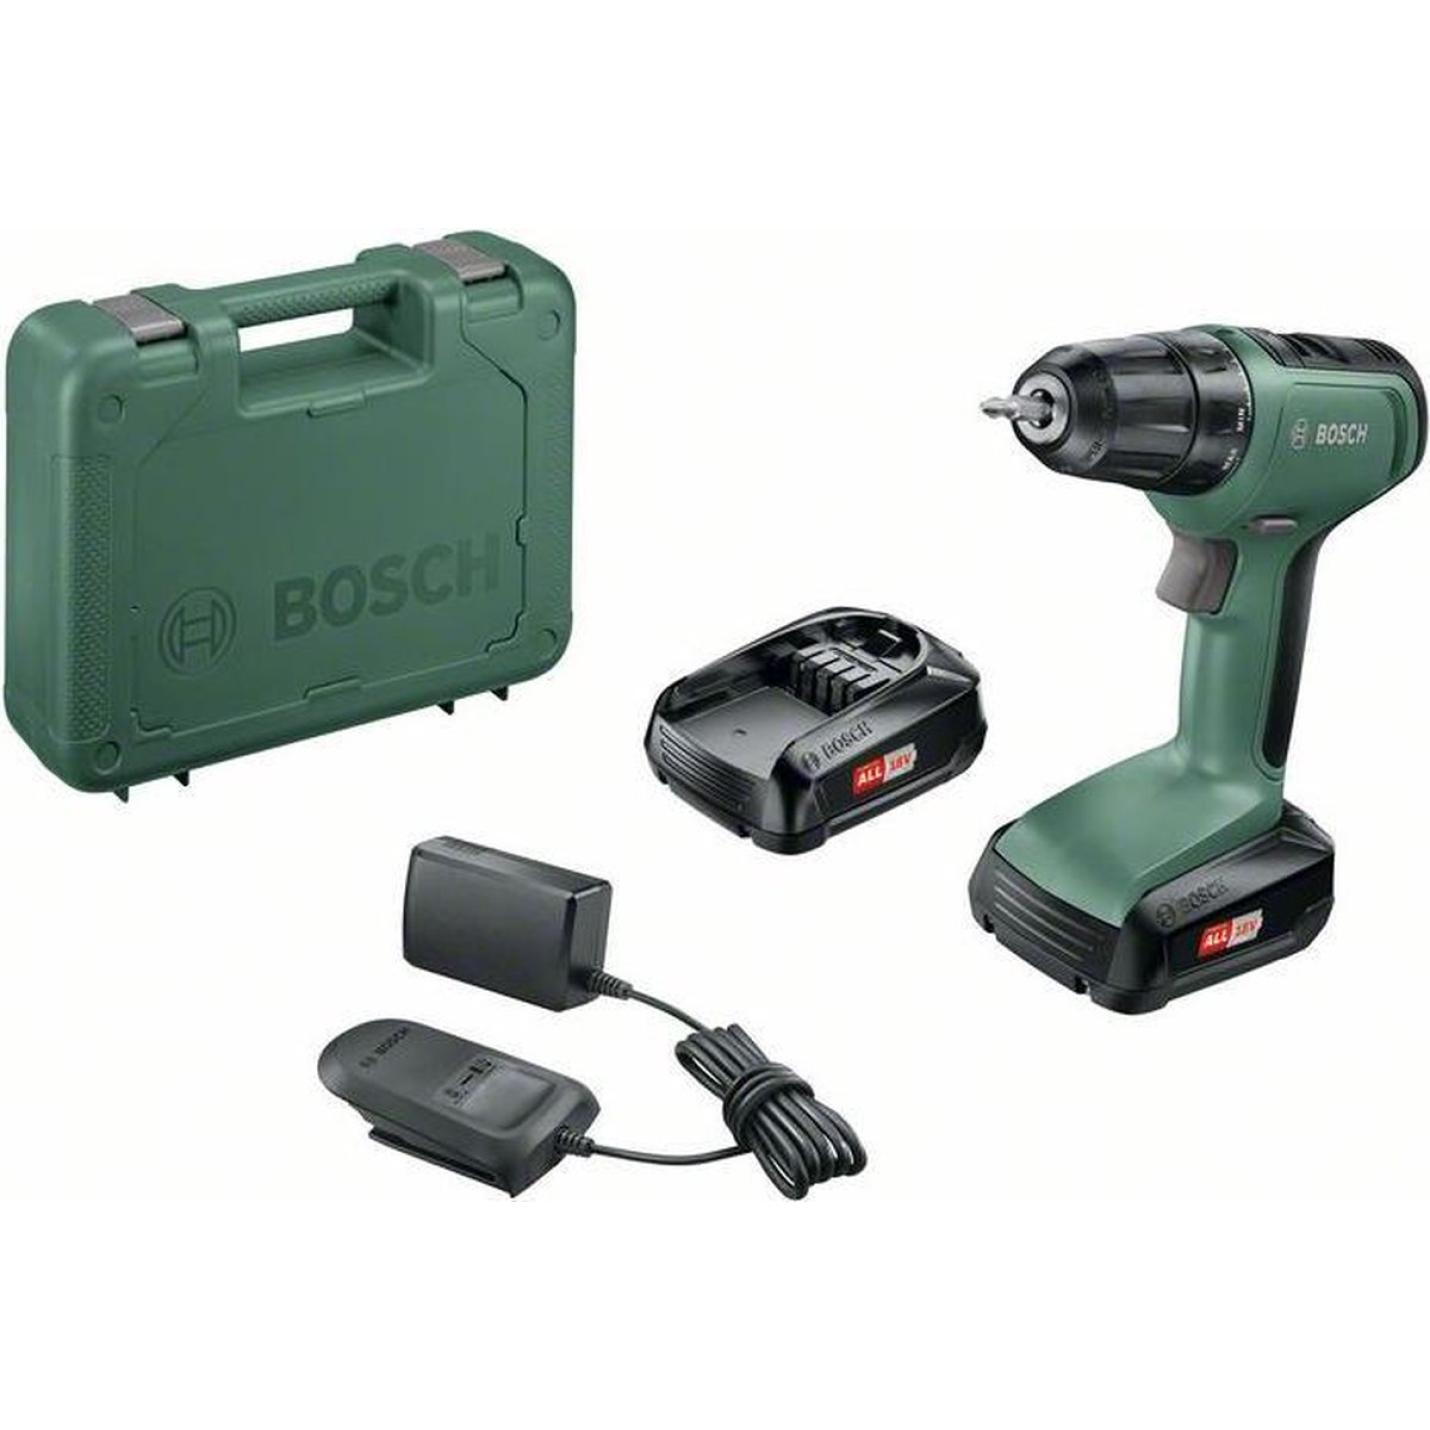 Bosch - Universal Drill 18 Cordless Screwdriver (Battery included) (E) 5